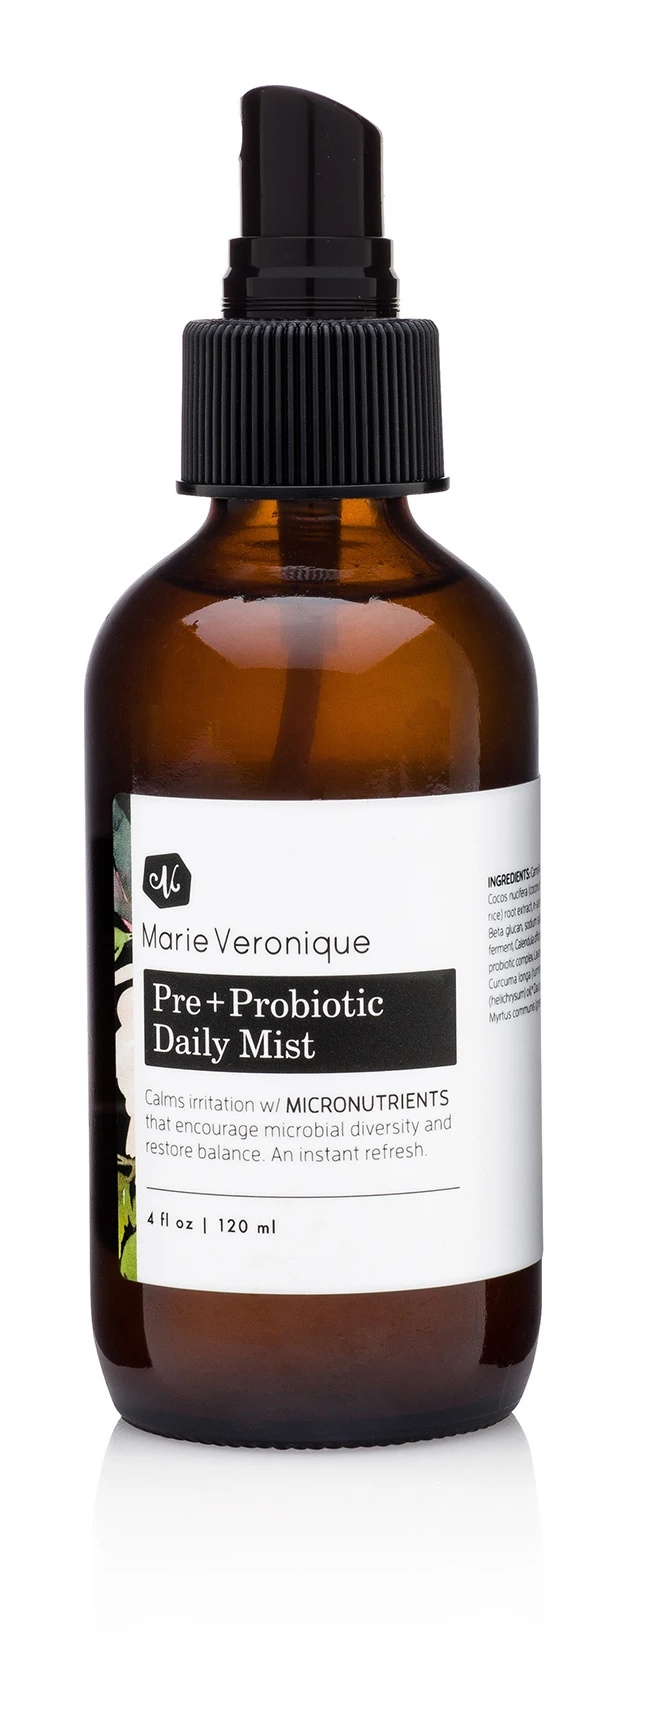 Marie Veronique Pre+Probiotic Daily Mist